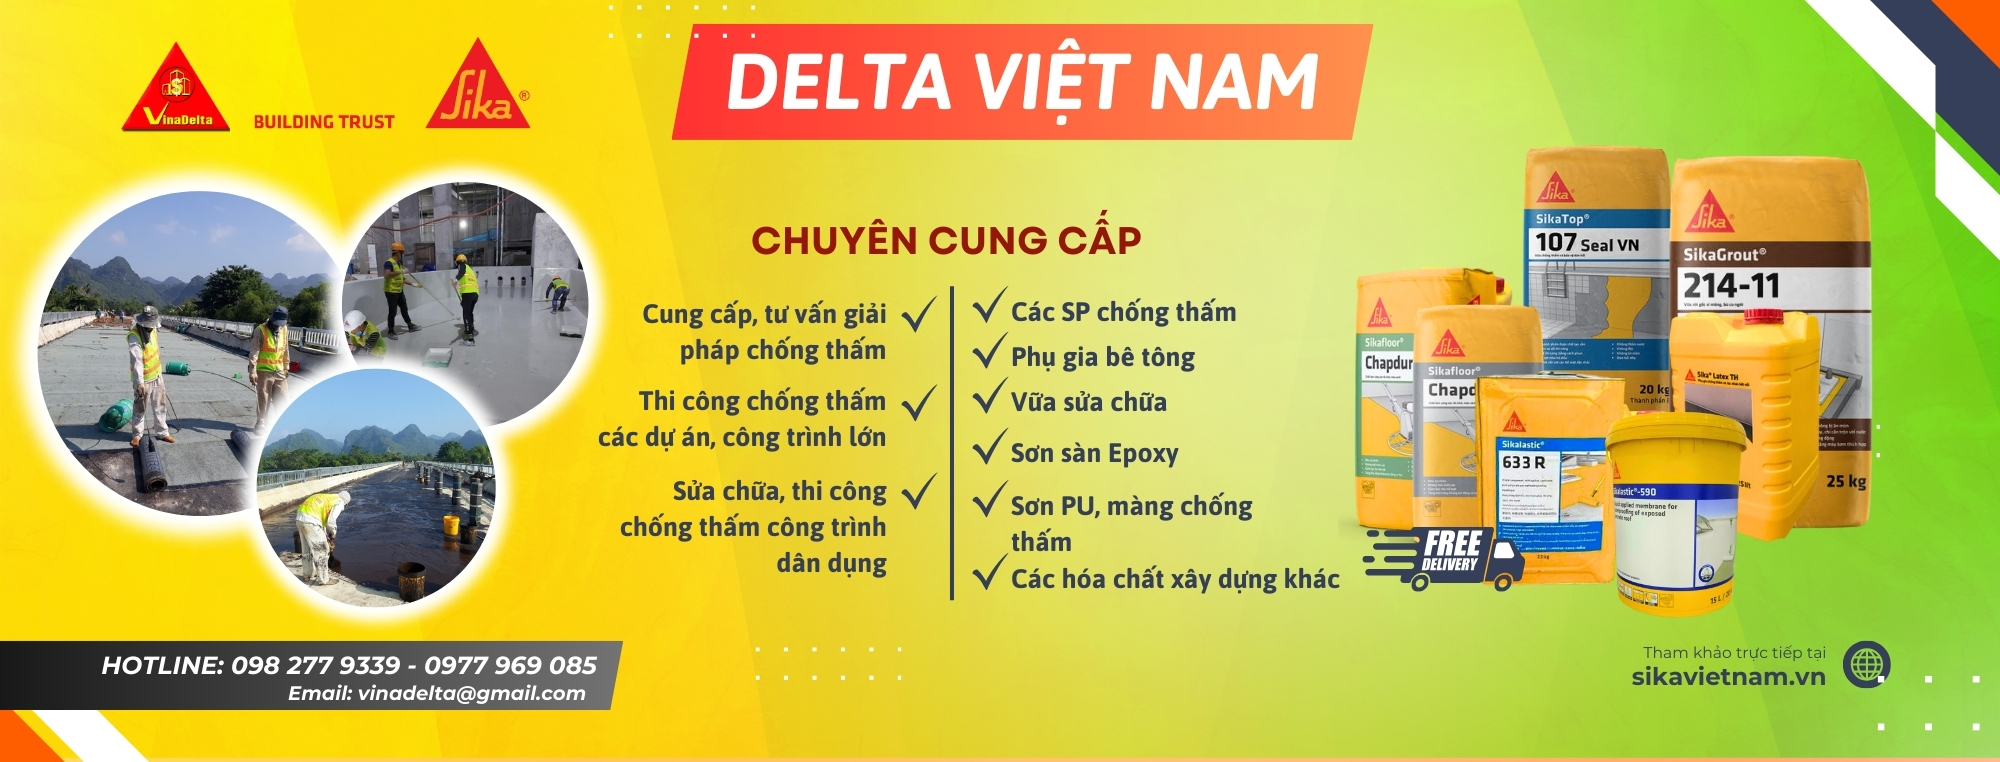 Cover image for Xây Dựng Thương Mại Delta Việt Nam